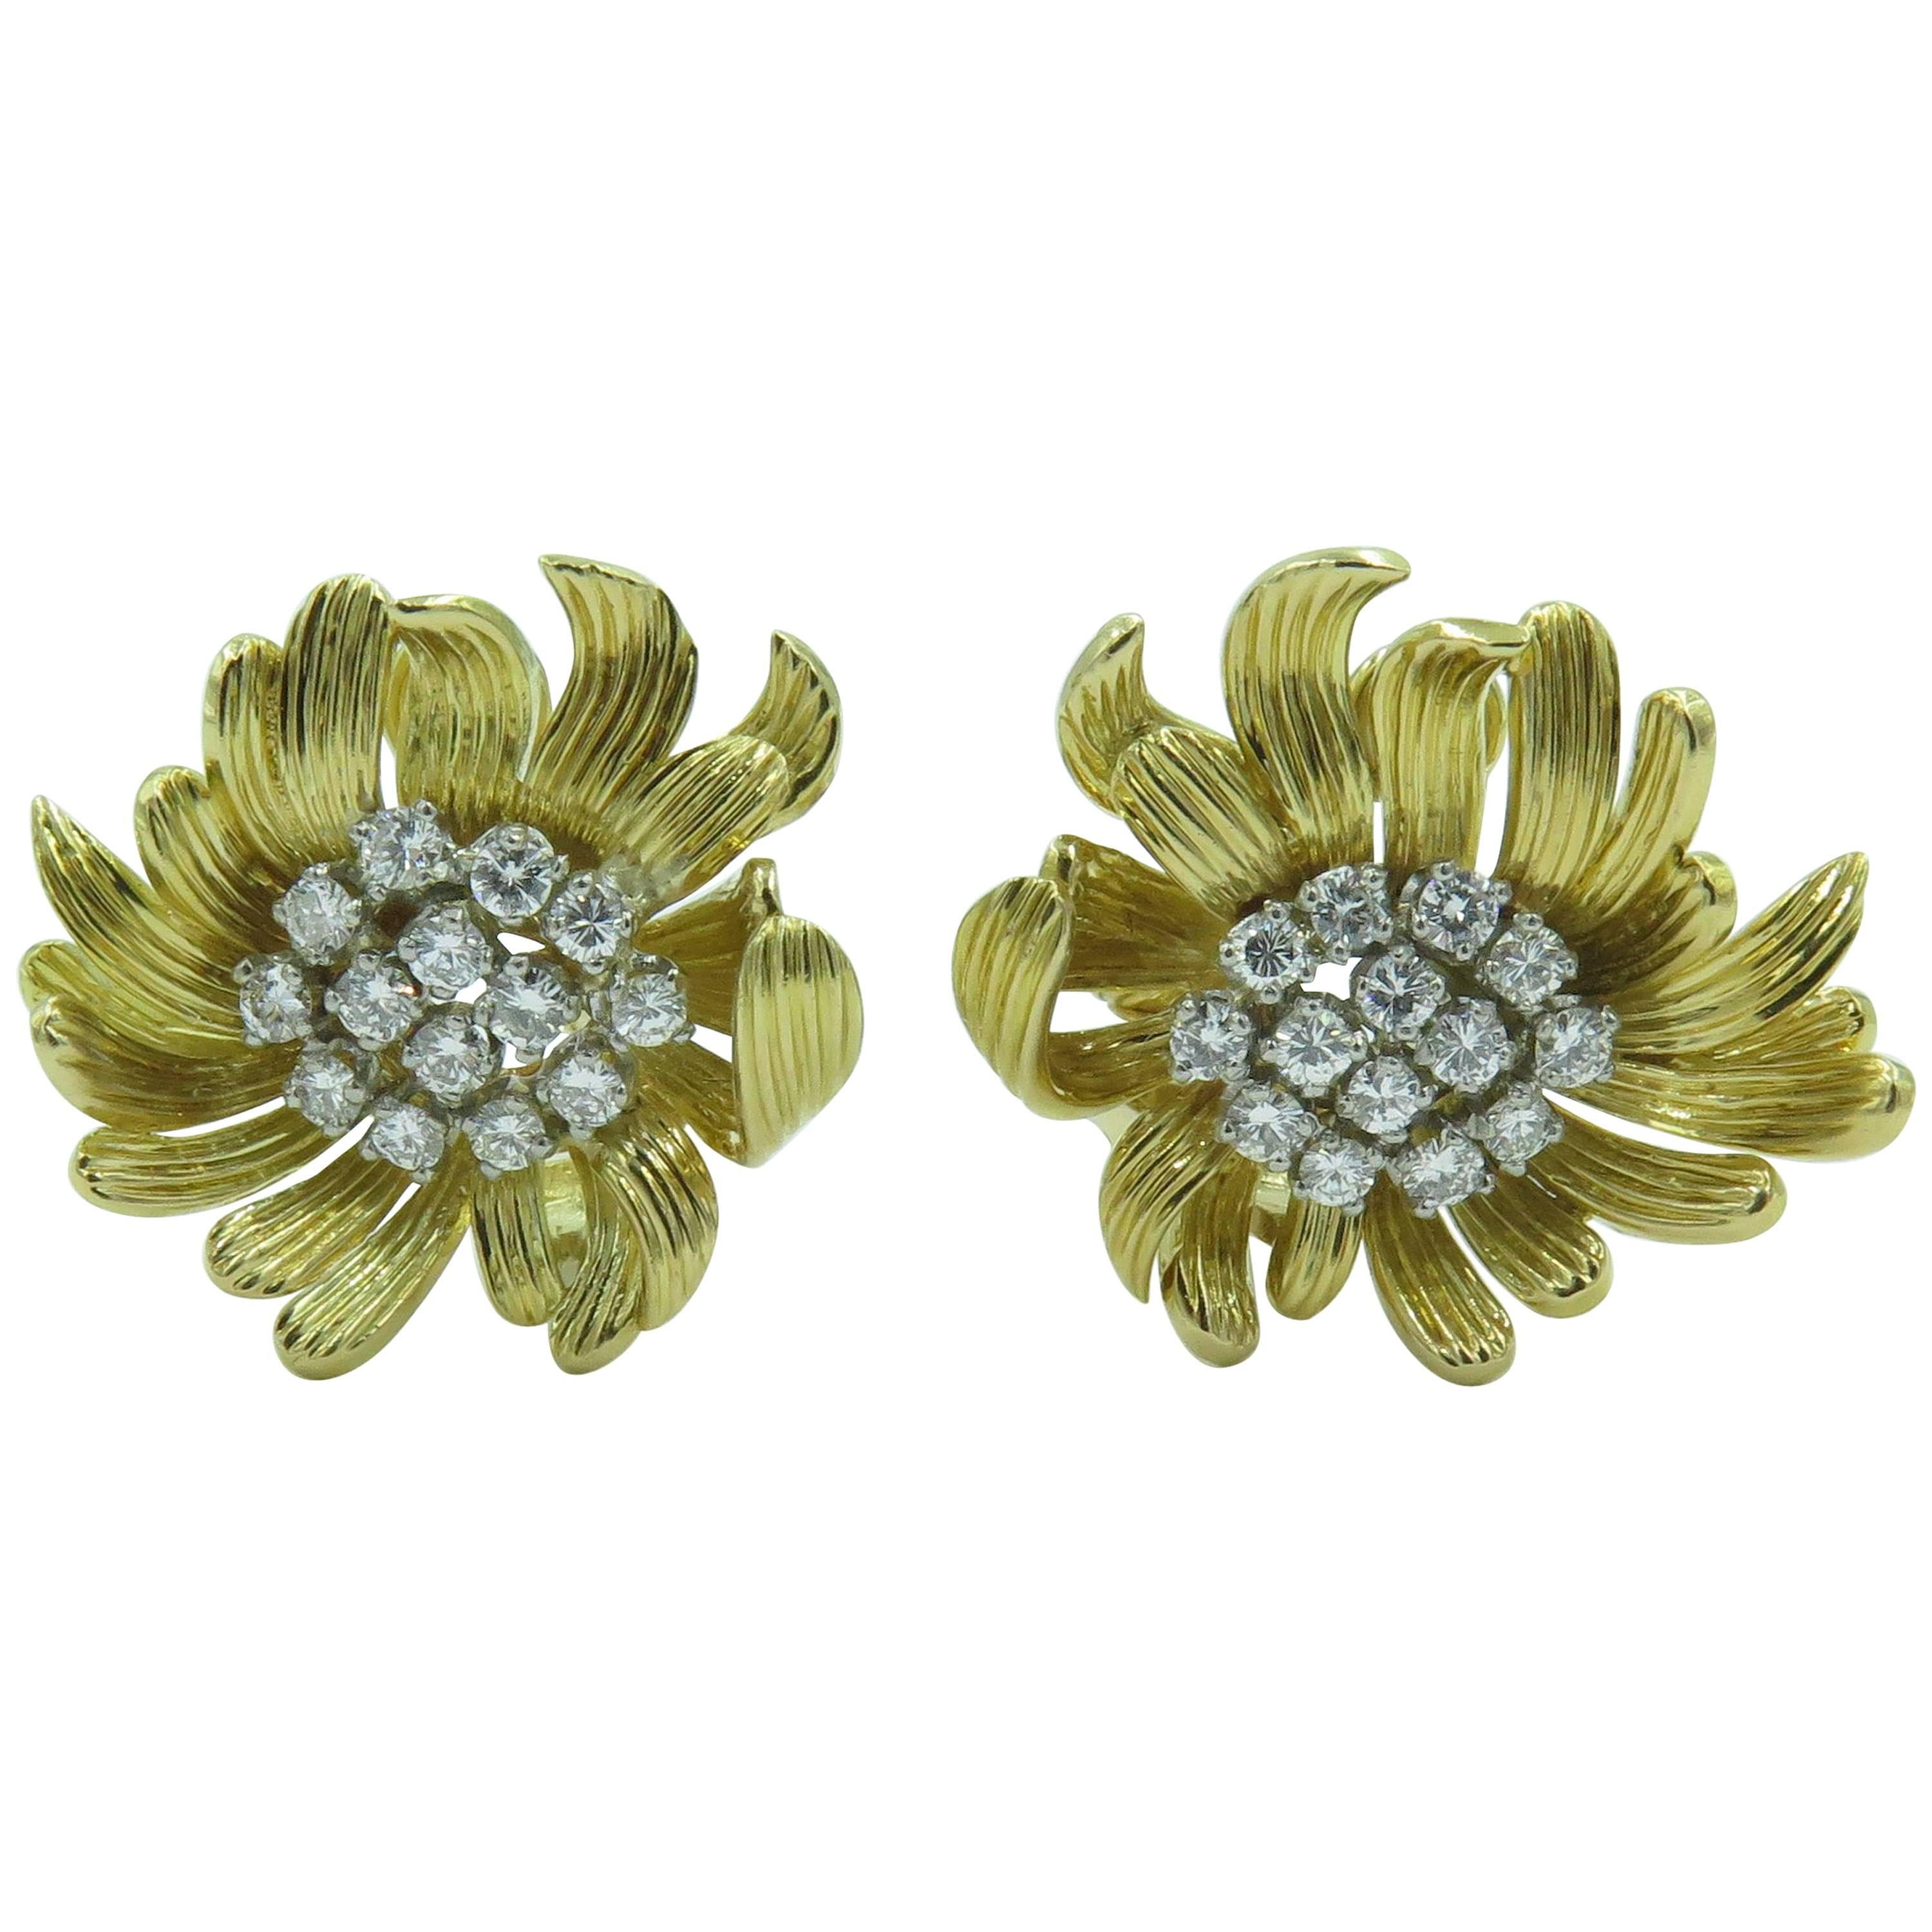 Pair of Gold and Diamond Flower Earrings